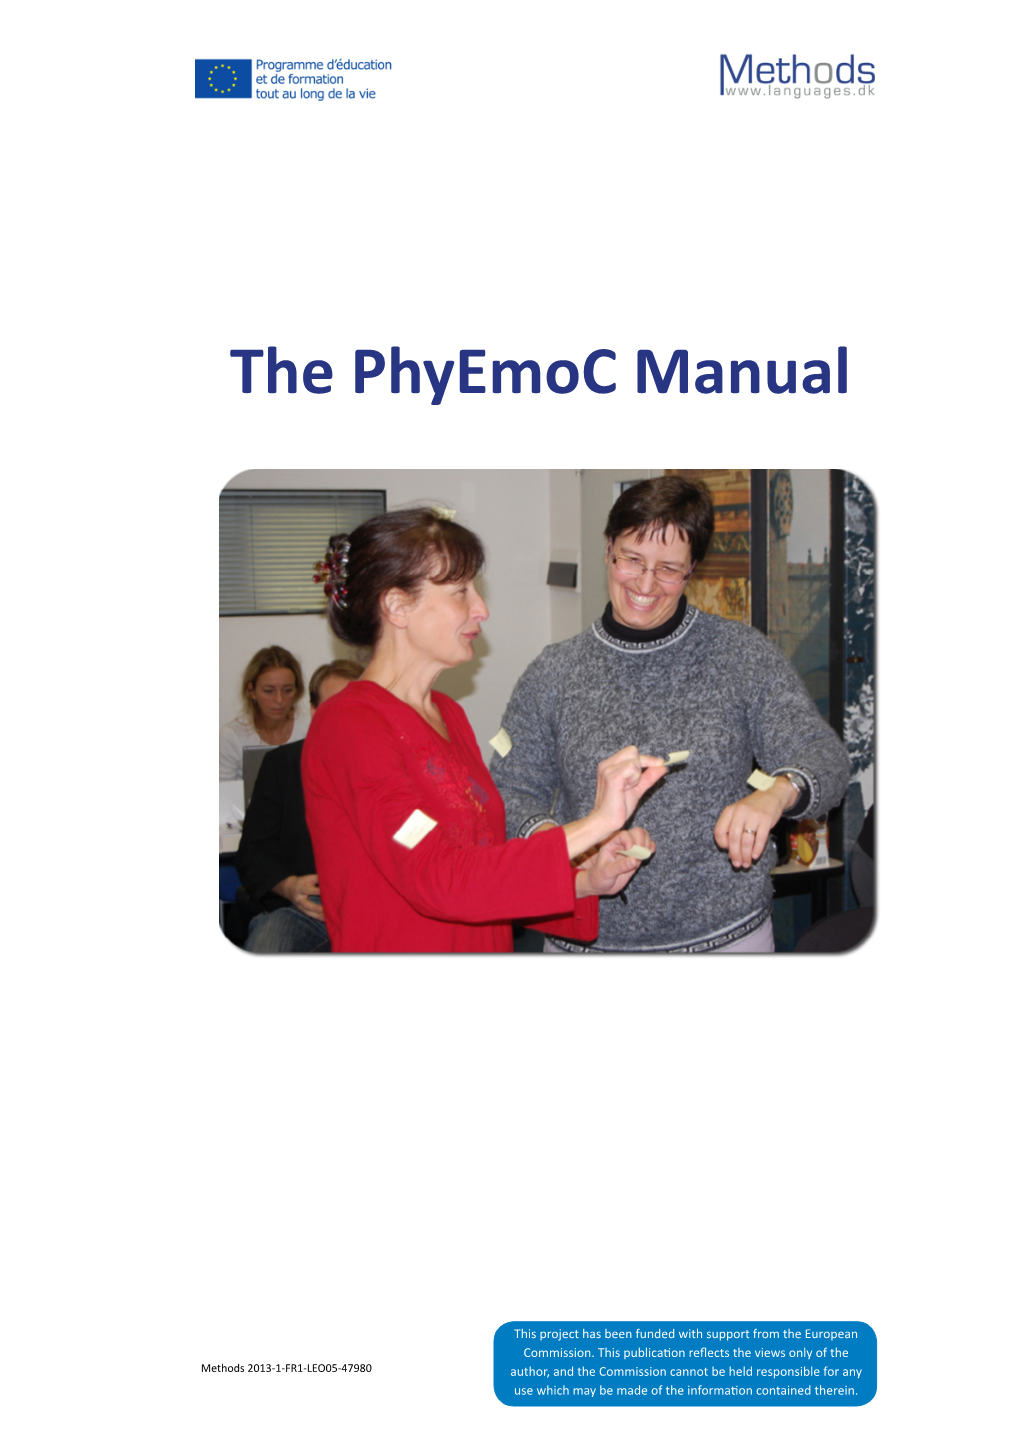 The Phyemoc Manual